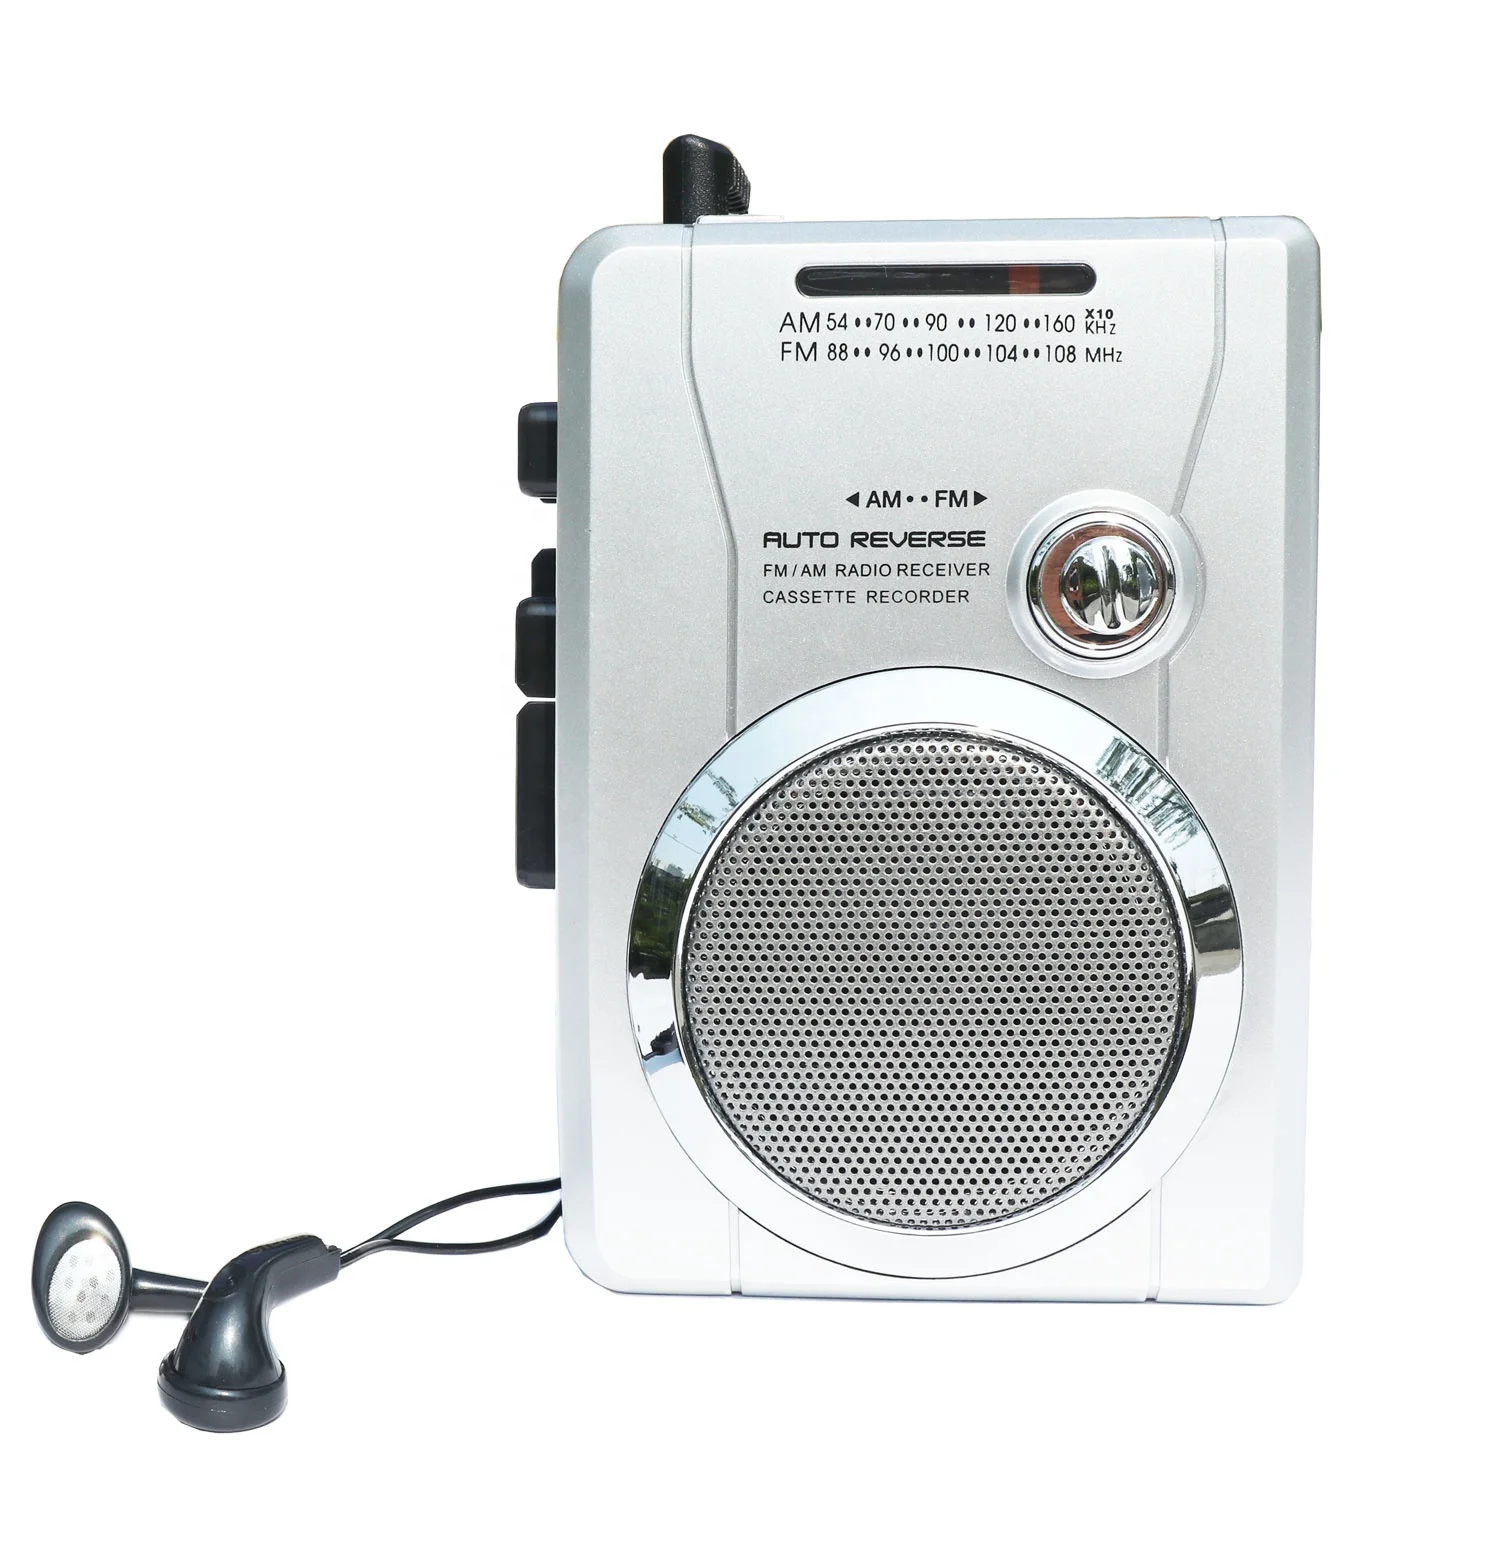 
cheap walkman cassette player with am fm radio auto reverse 